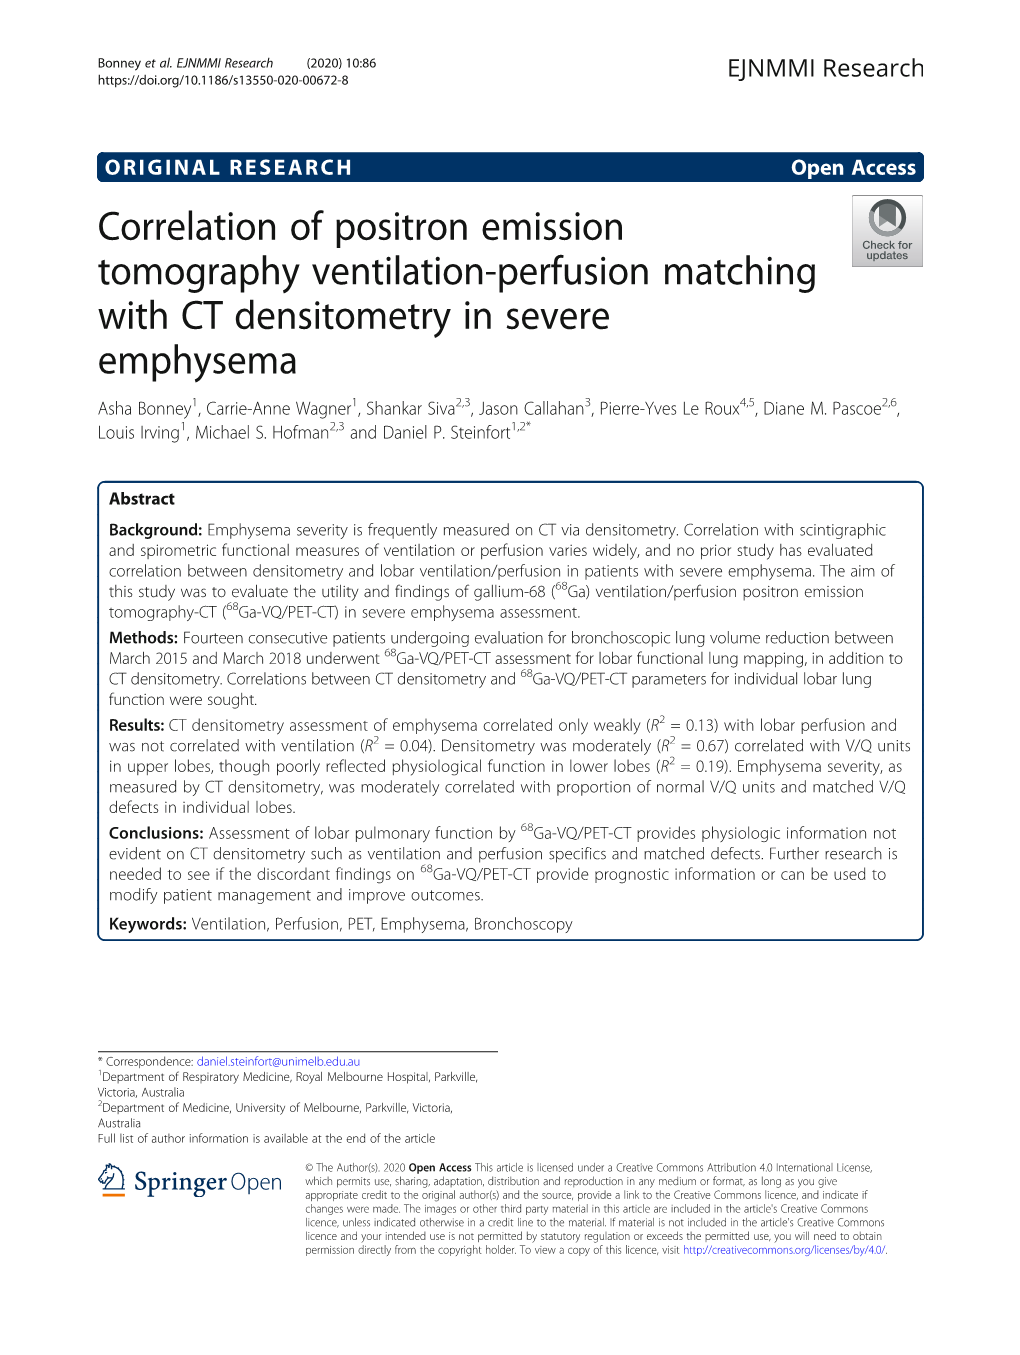 Correlation of Positron Emission Tomography Ventilation-Perfusion